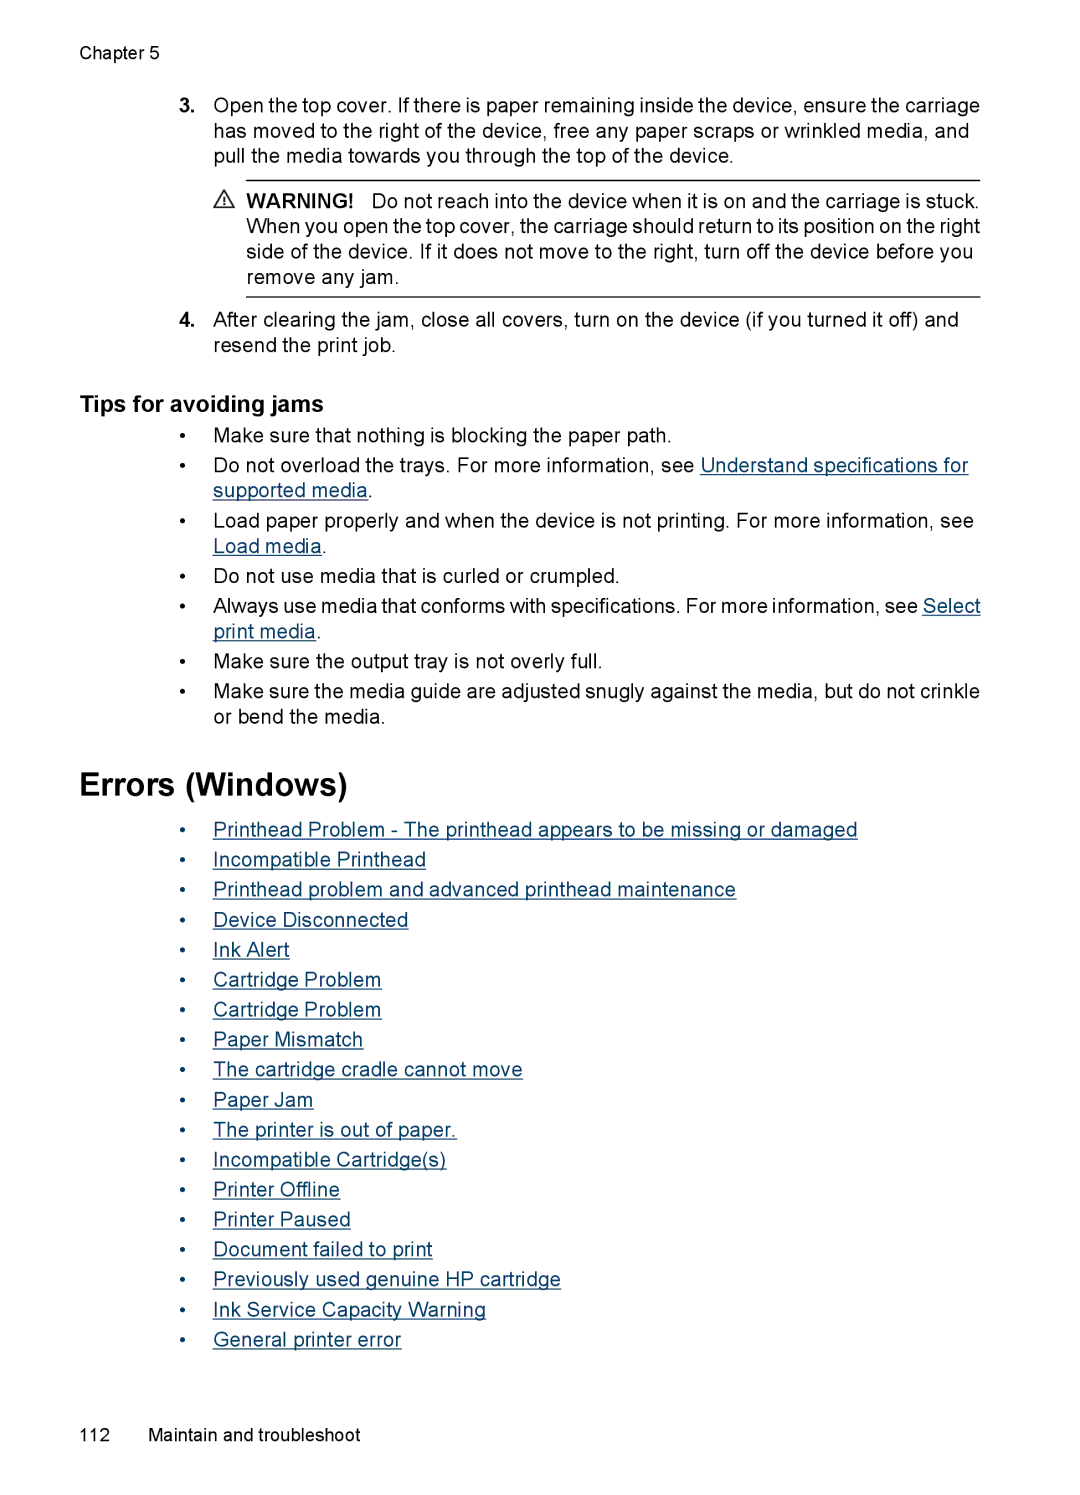 Hitachi E609, C9295A#B1H manual Errors Windows, Tips for avoiding jams 